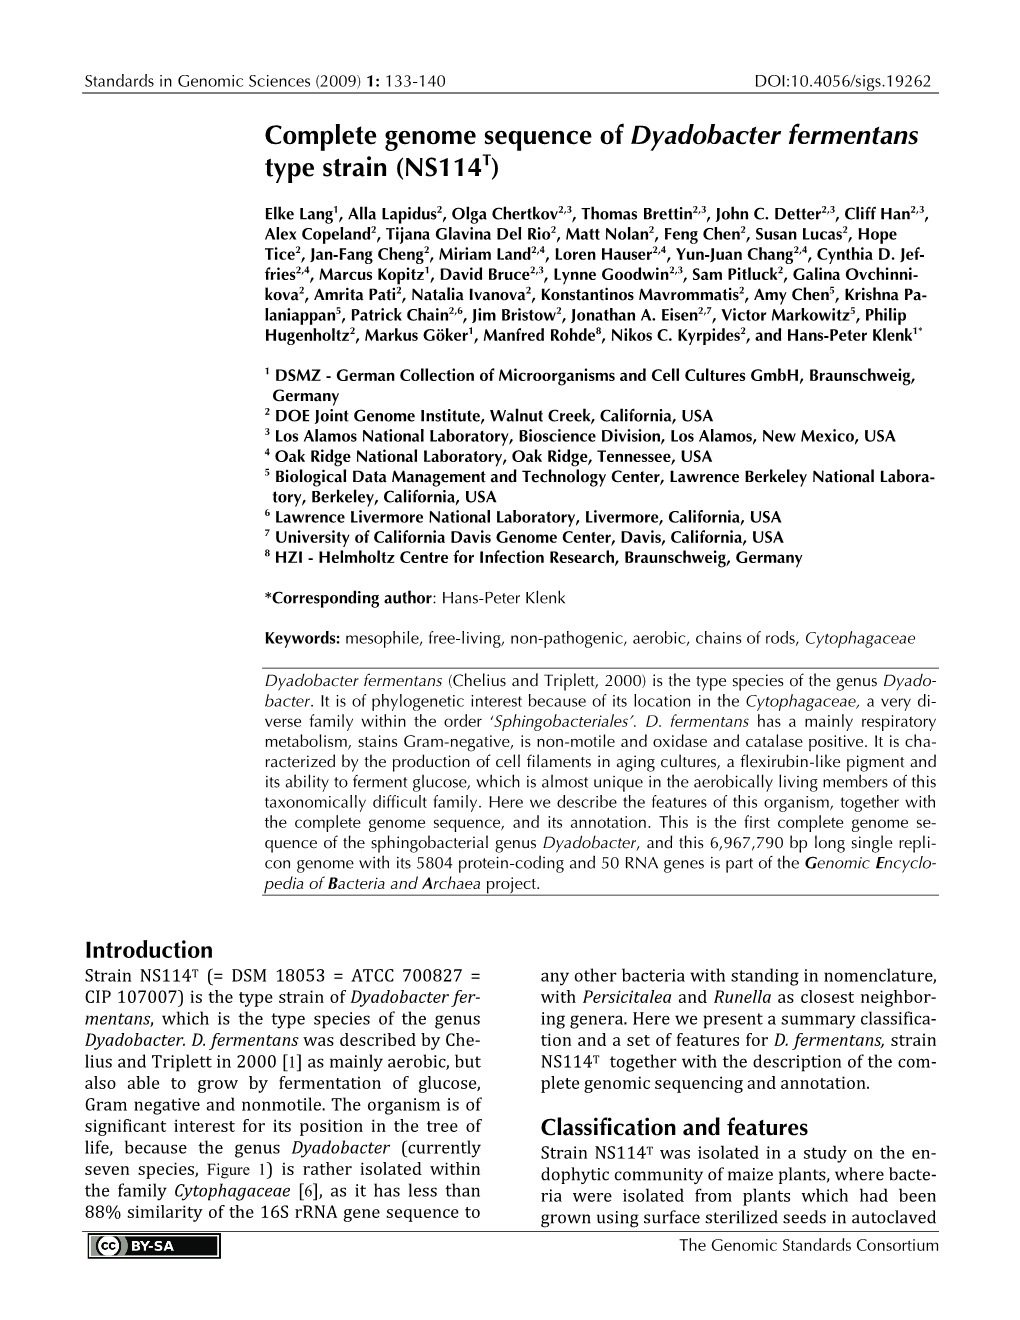 Dyadobacter Fermentans Type Strain NS114 Synthetic Soil in Greenhouses [1]